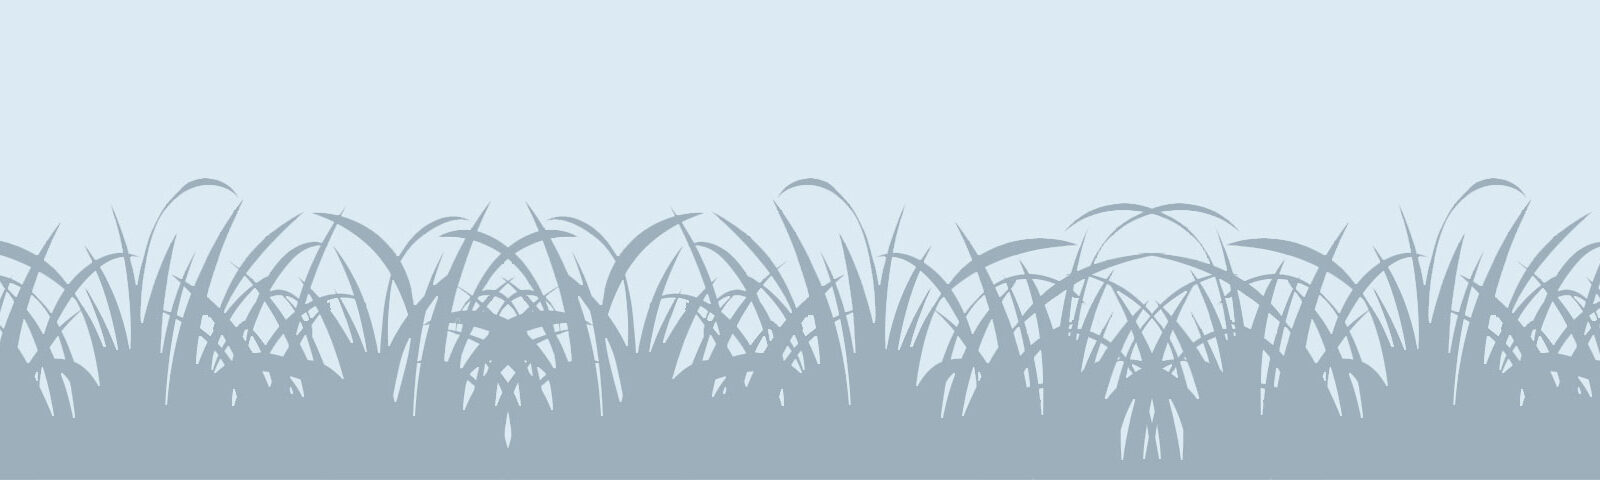 banner sea grass